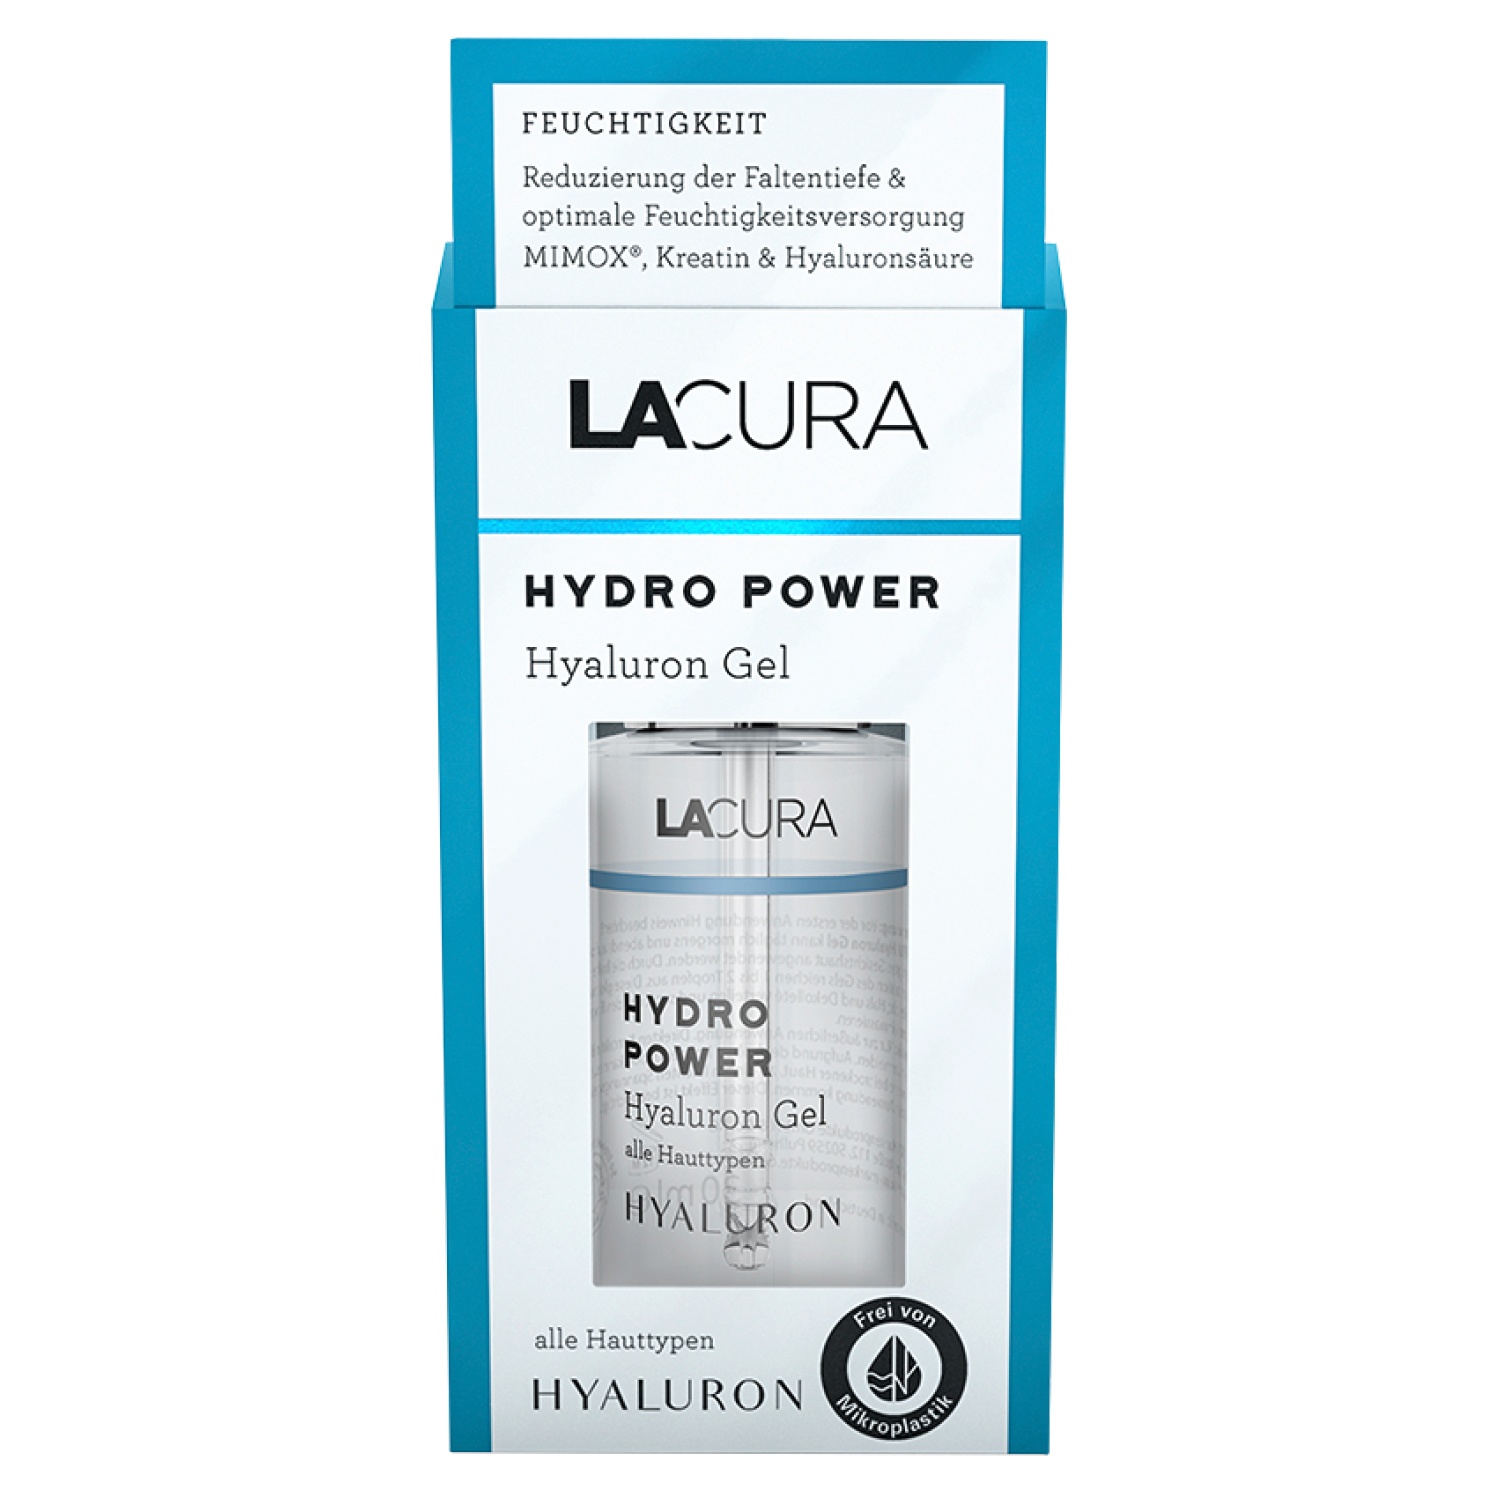 LACURA Hydro Power Hyaluron Gel 30ml